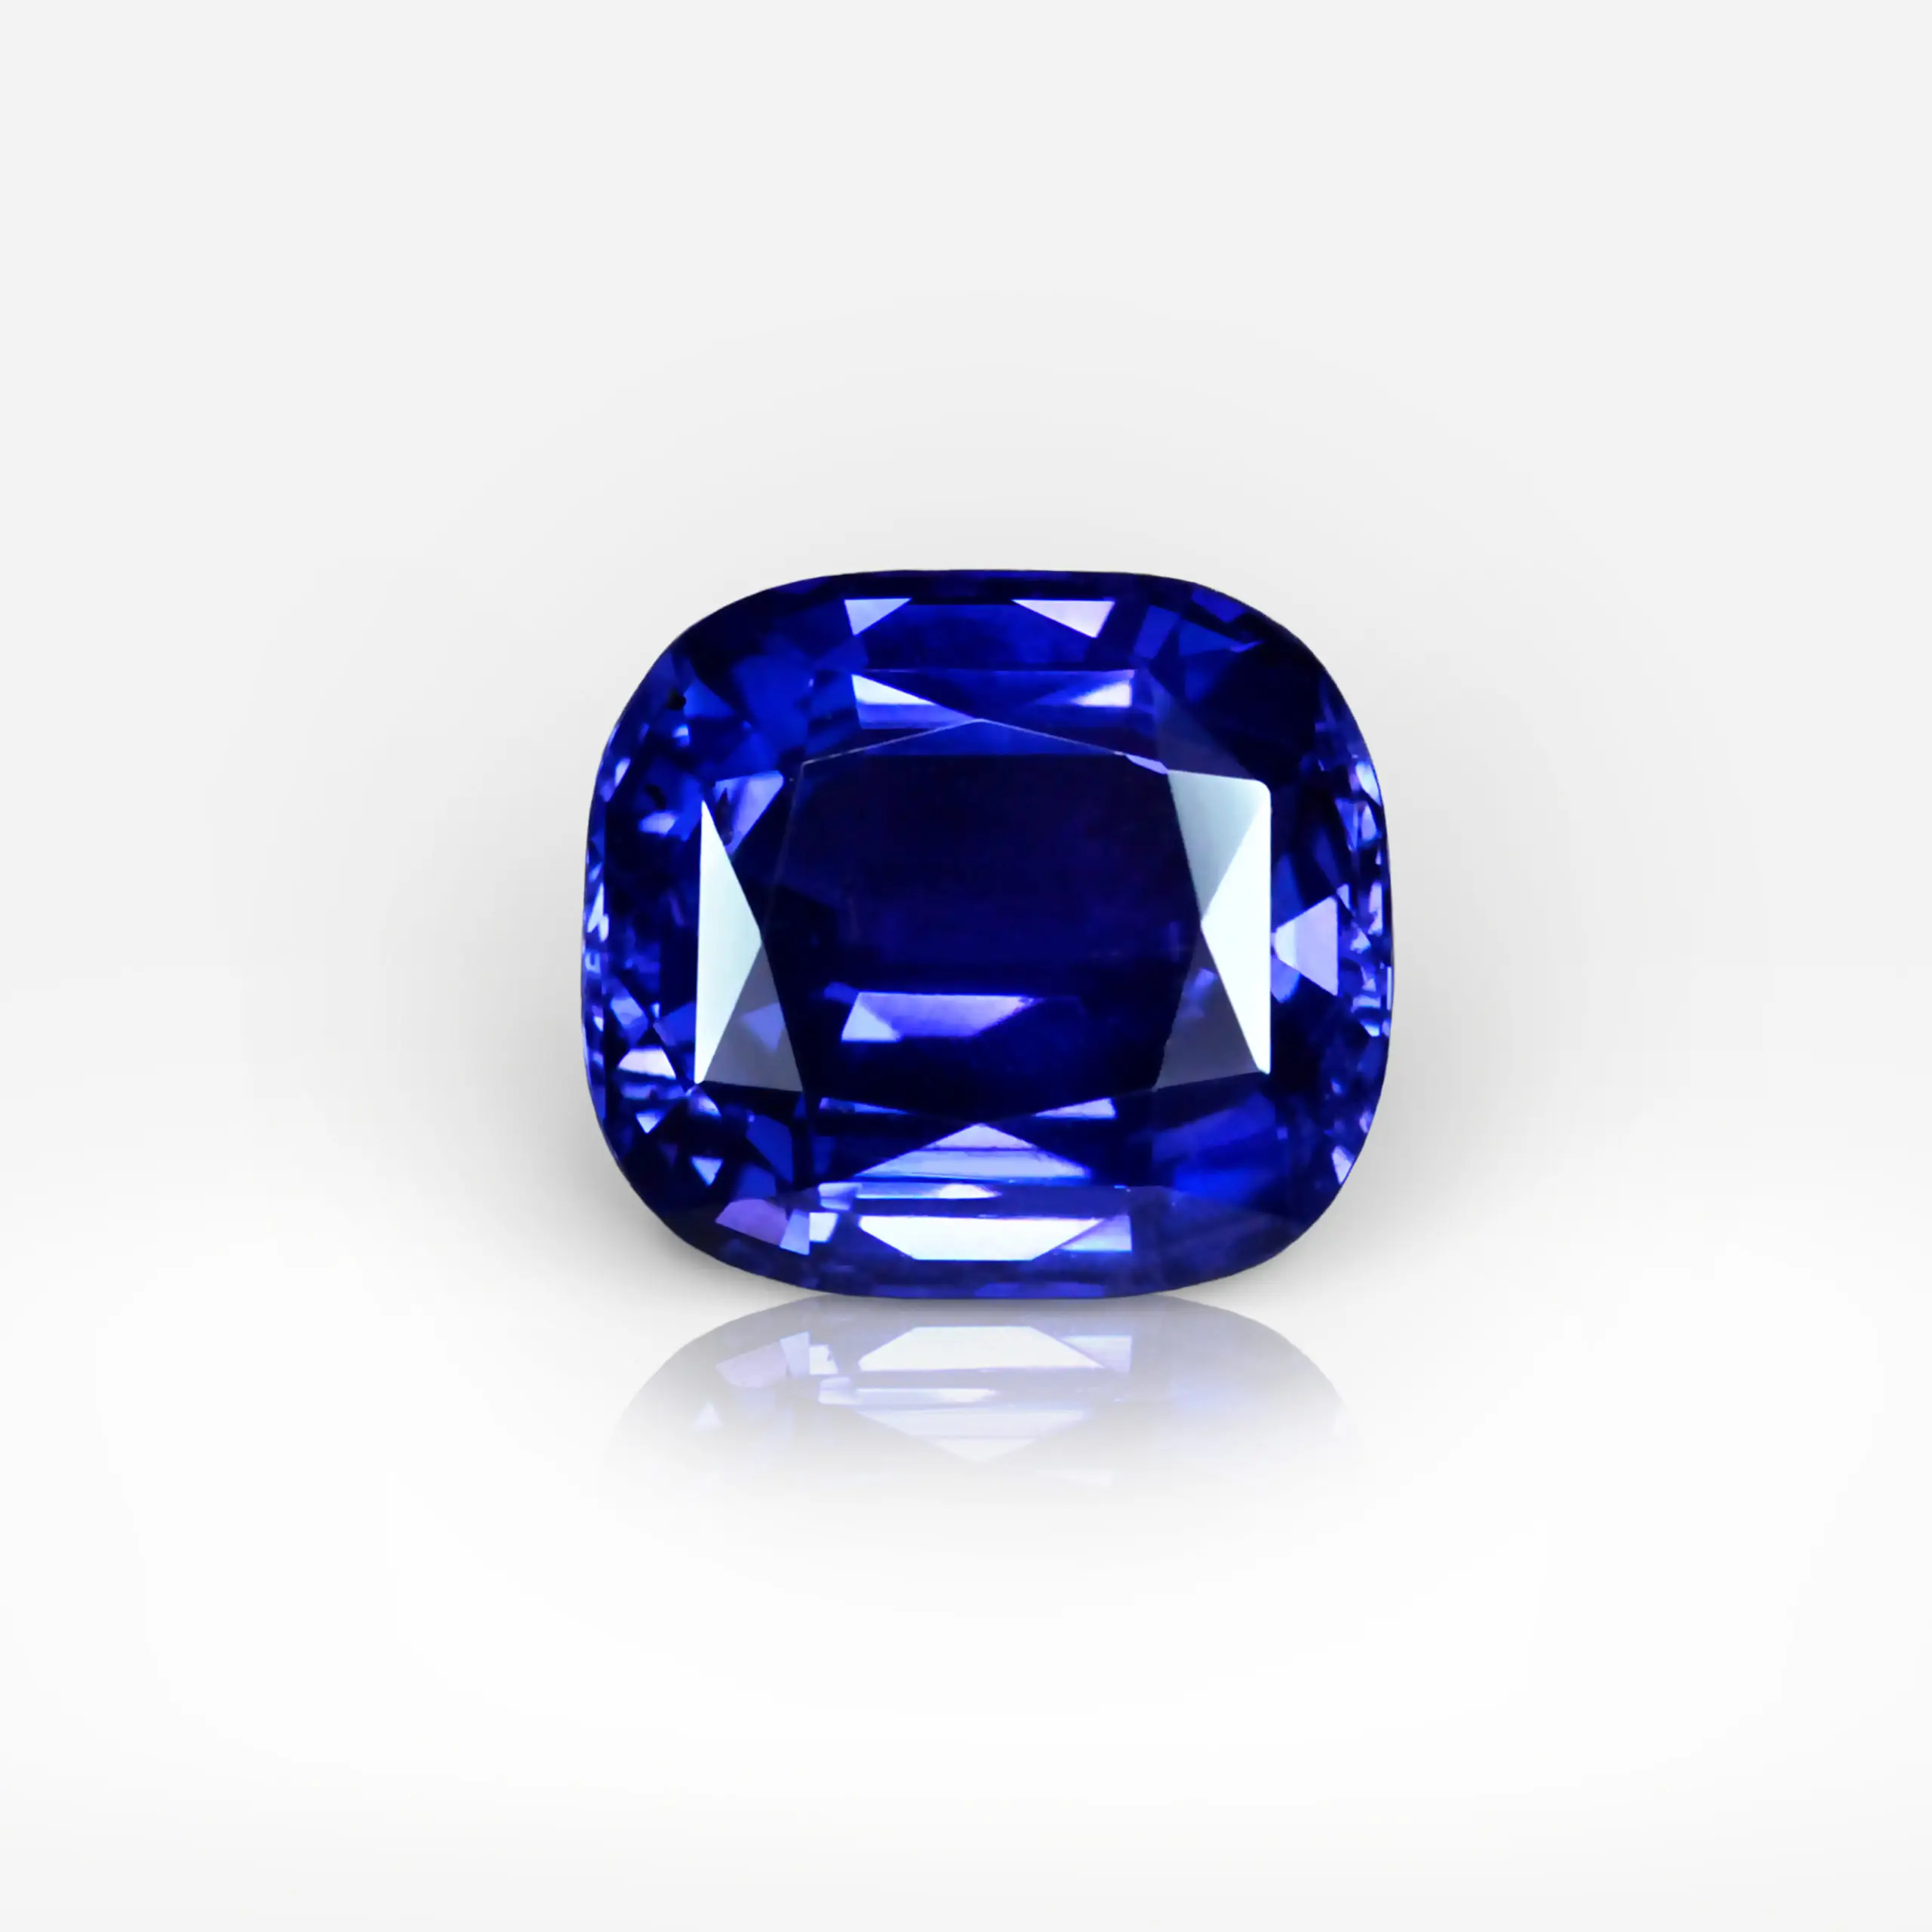 3.84 carat Cushion Shape Sri Lankan Blue Sapphire - picture 1